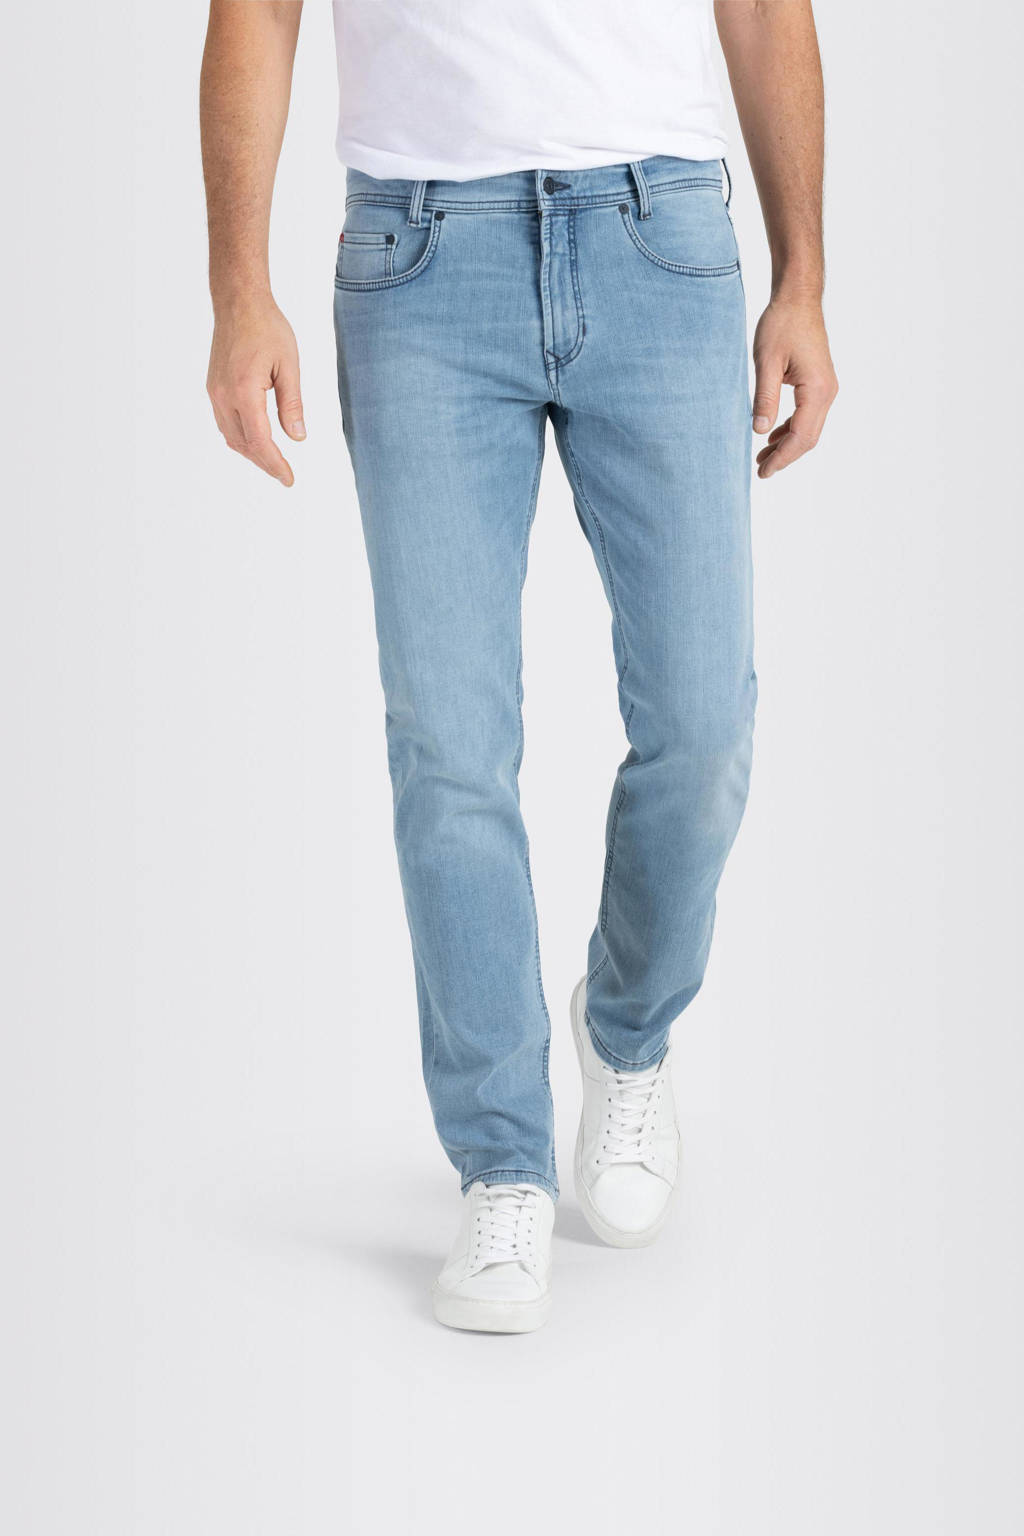 MAC regular fit jeans Macflexx pure indigo authentic, Pure indigo authentic